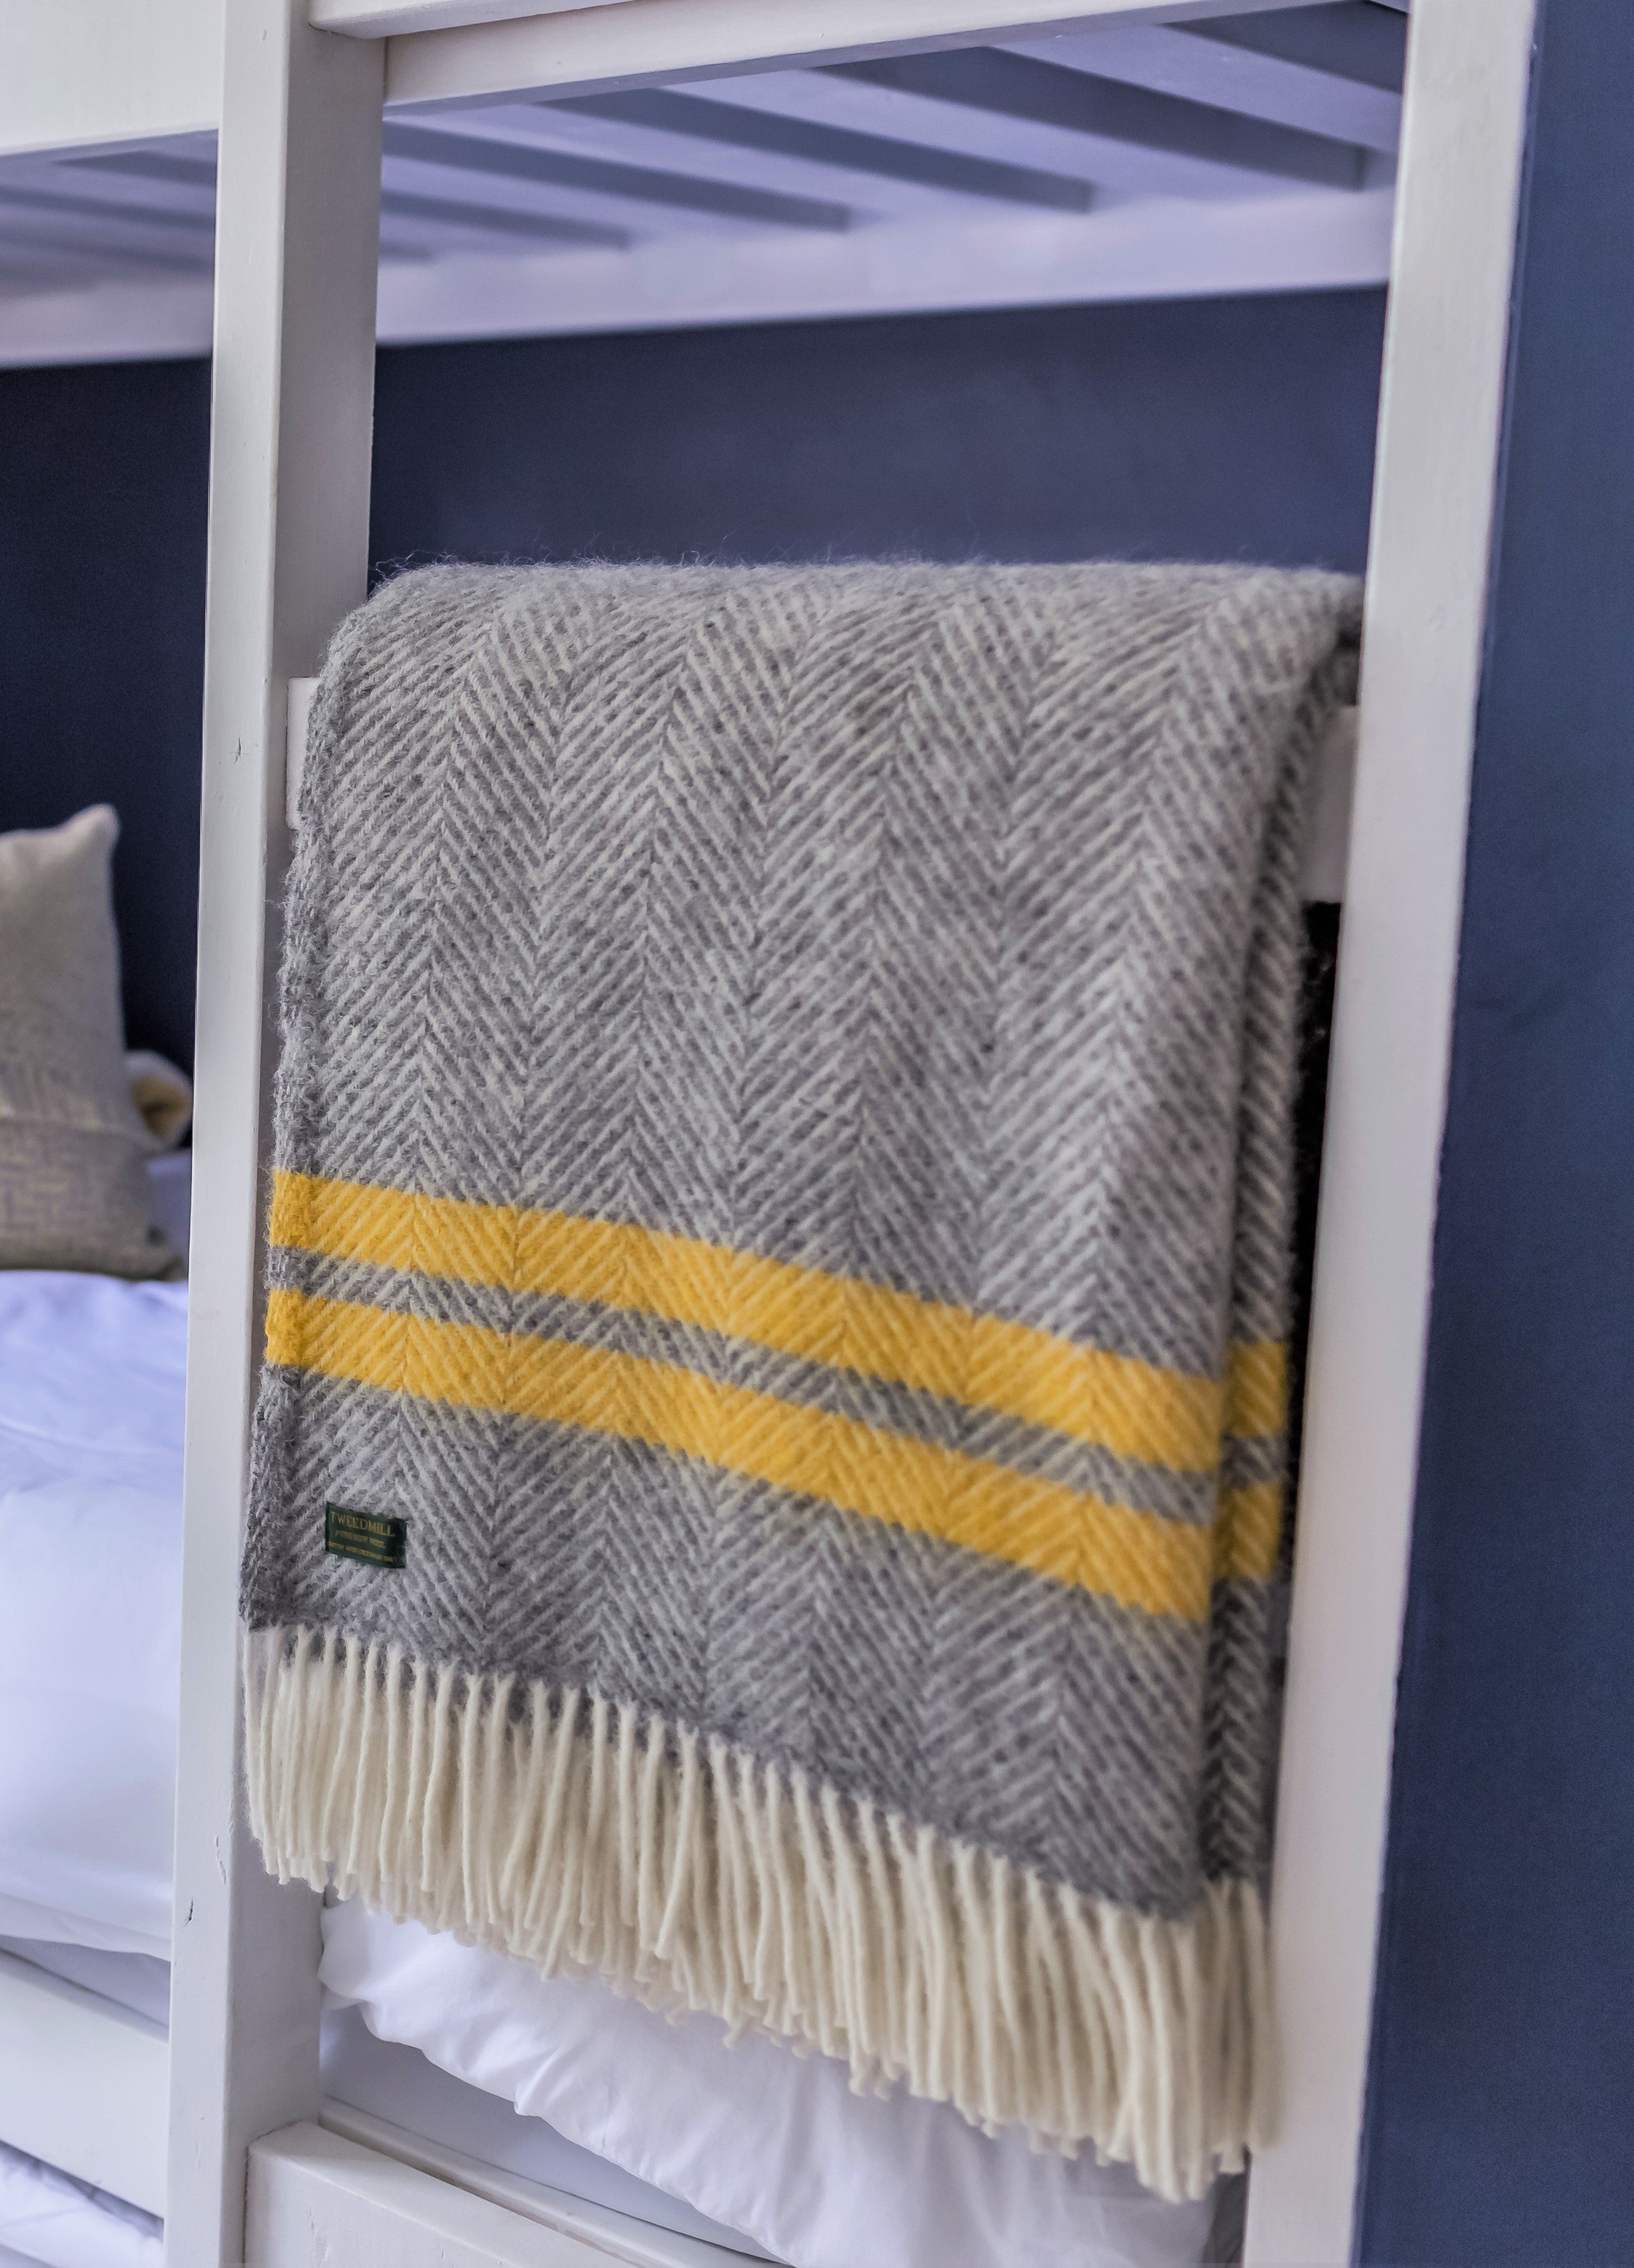 Fishbone 2 Stripe Knee Blanket - Pure New Wool Made in the UK by Tweedmill